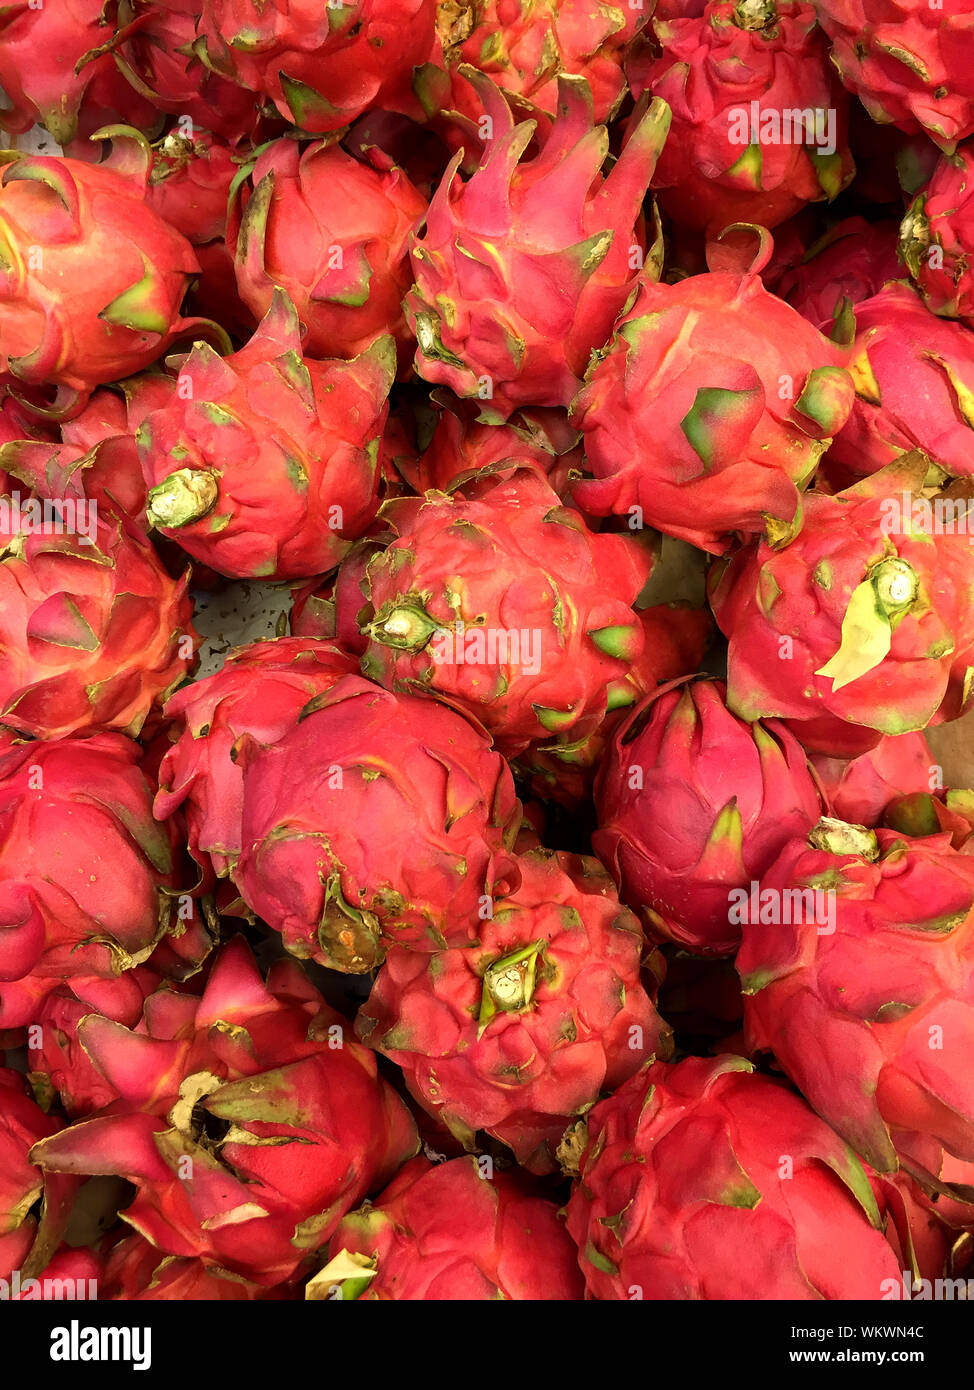 Red pitayas fotografías e imágenes de alta resolución - Alamy